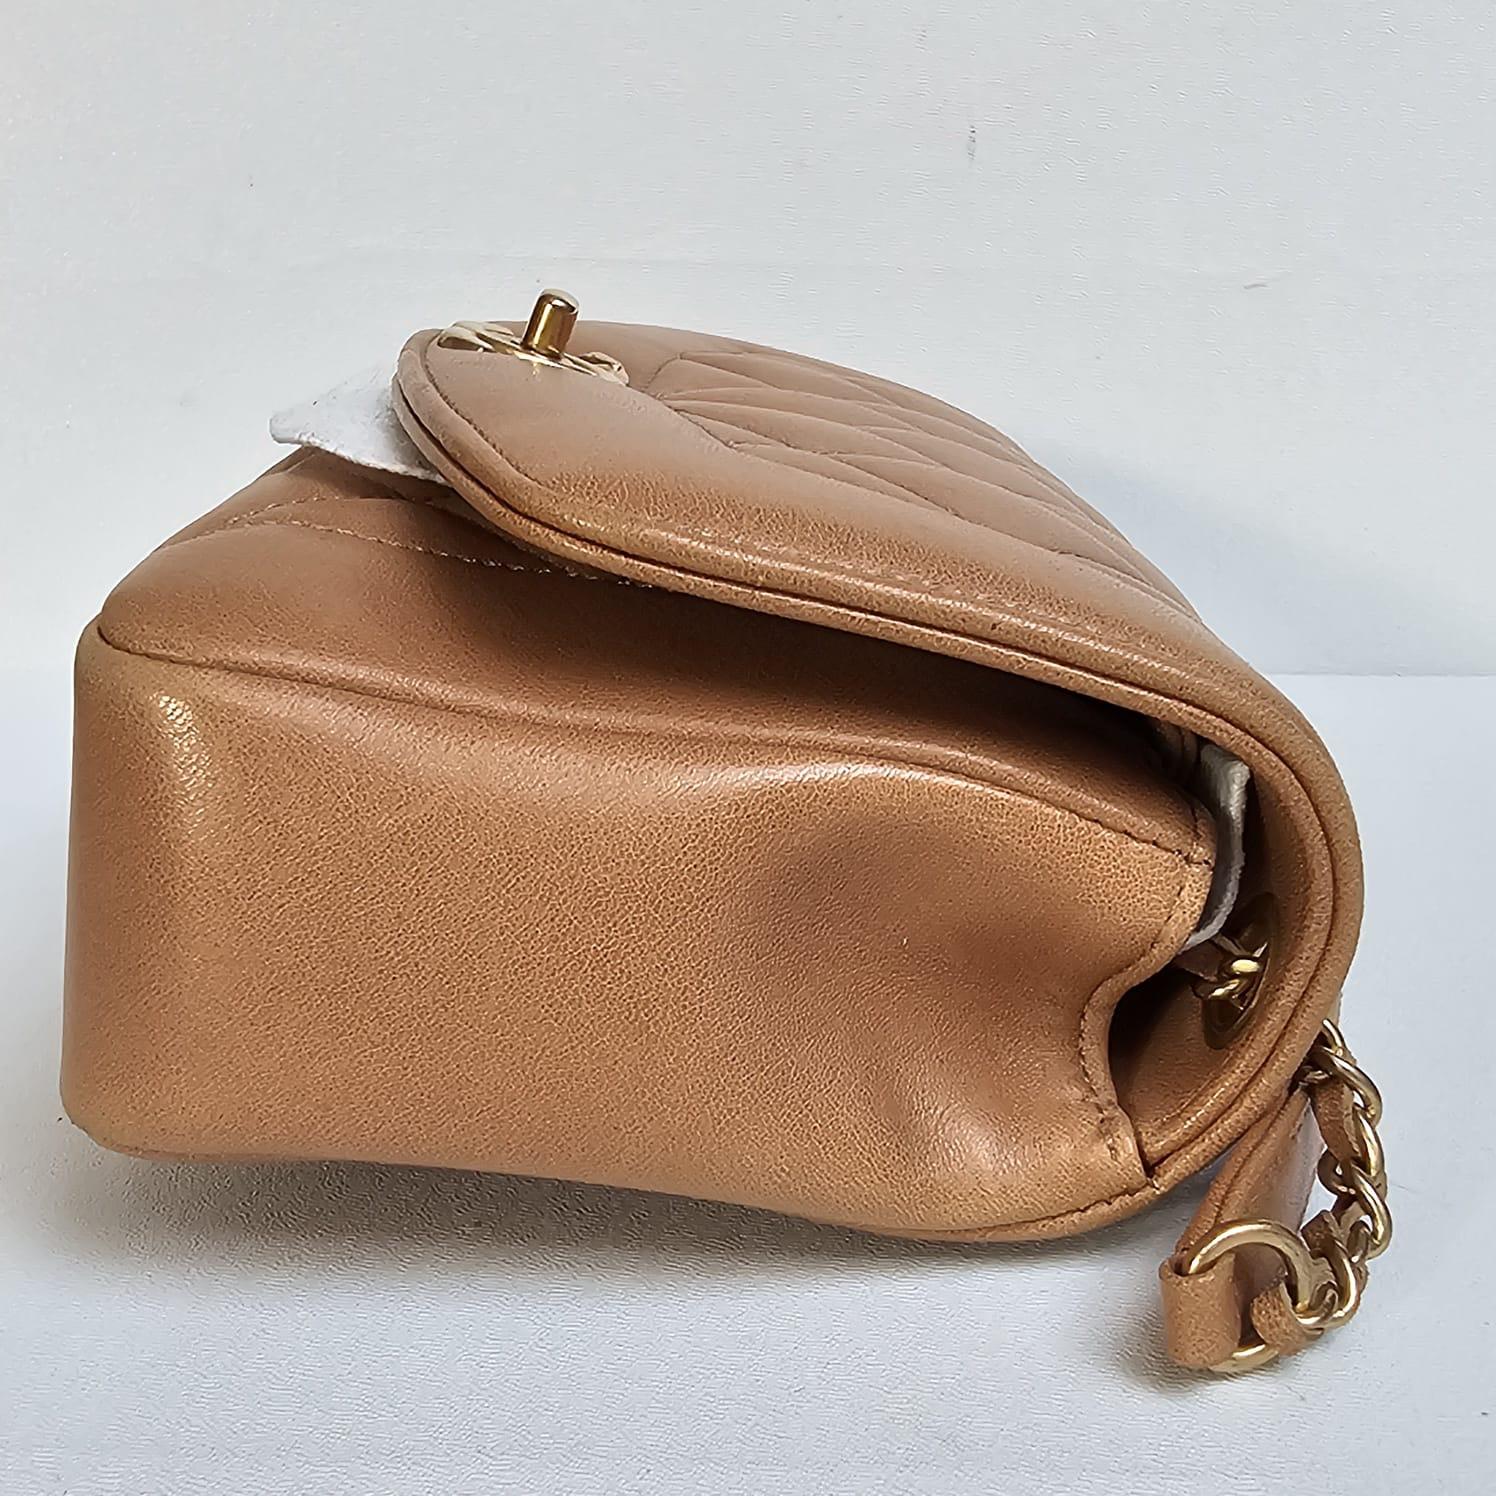 2014-2015 Chanel Caramel Diana Flap Bag For Sale 2